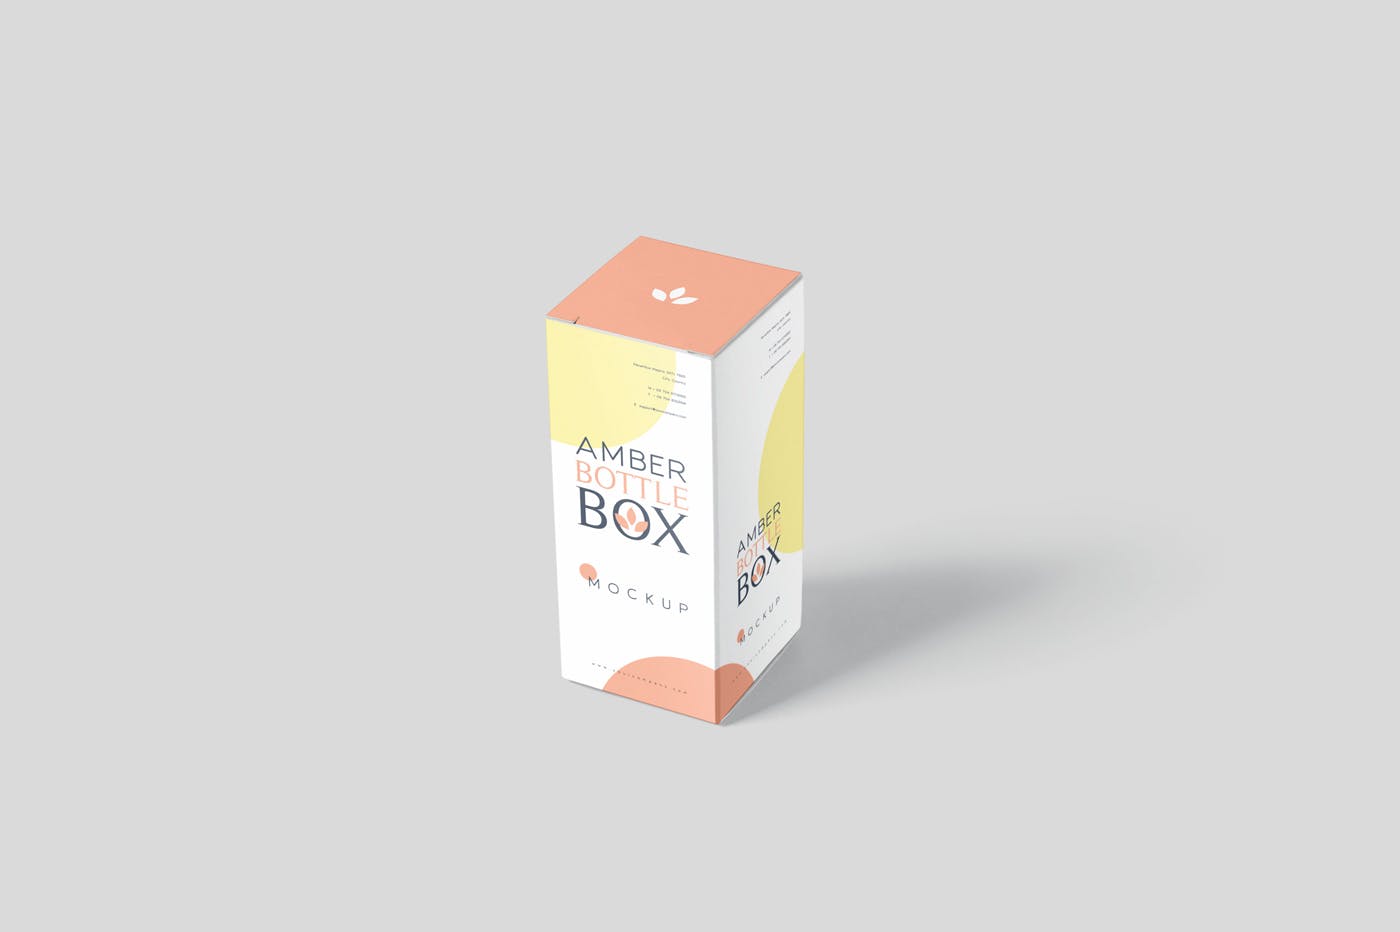 药物瓶&包装纸盒设计图素材库精选模板 Amber Bottle Box Mockup Set插图(2)